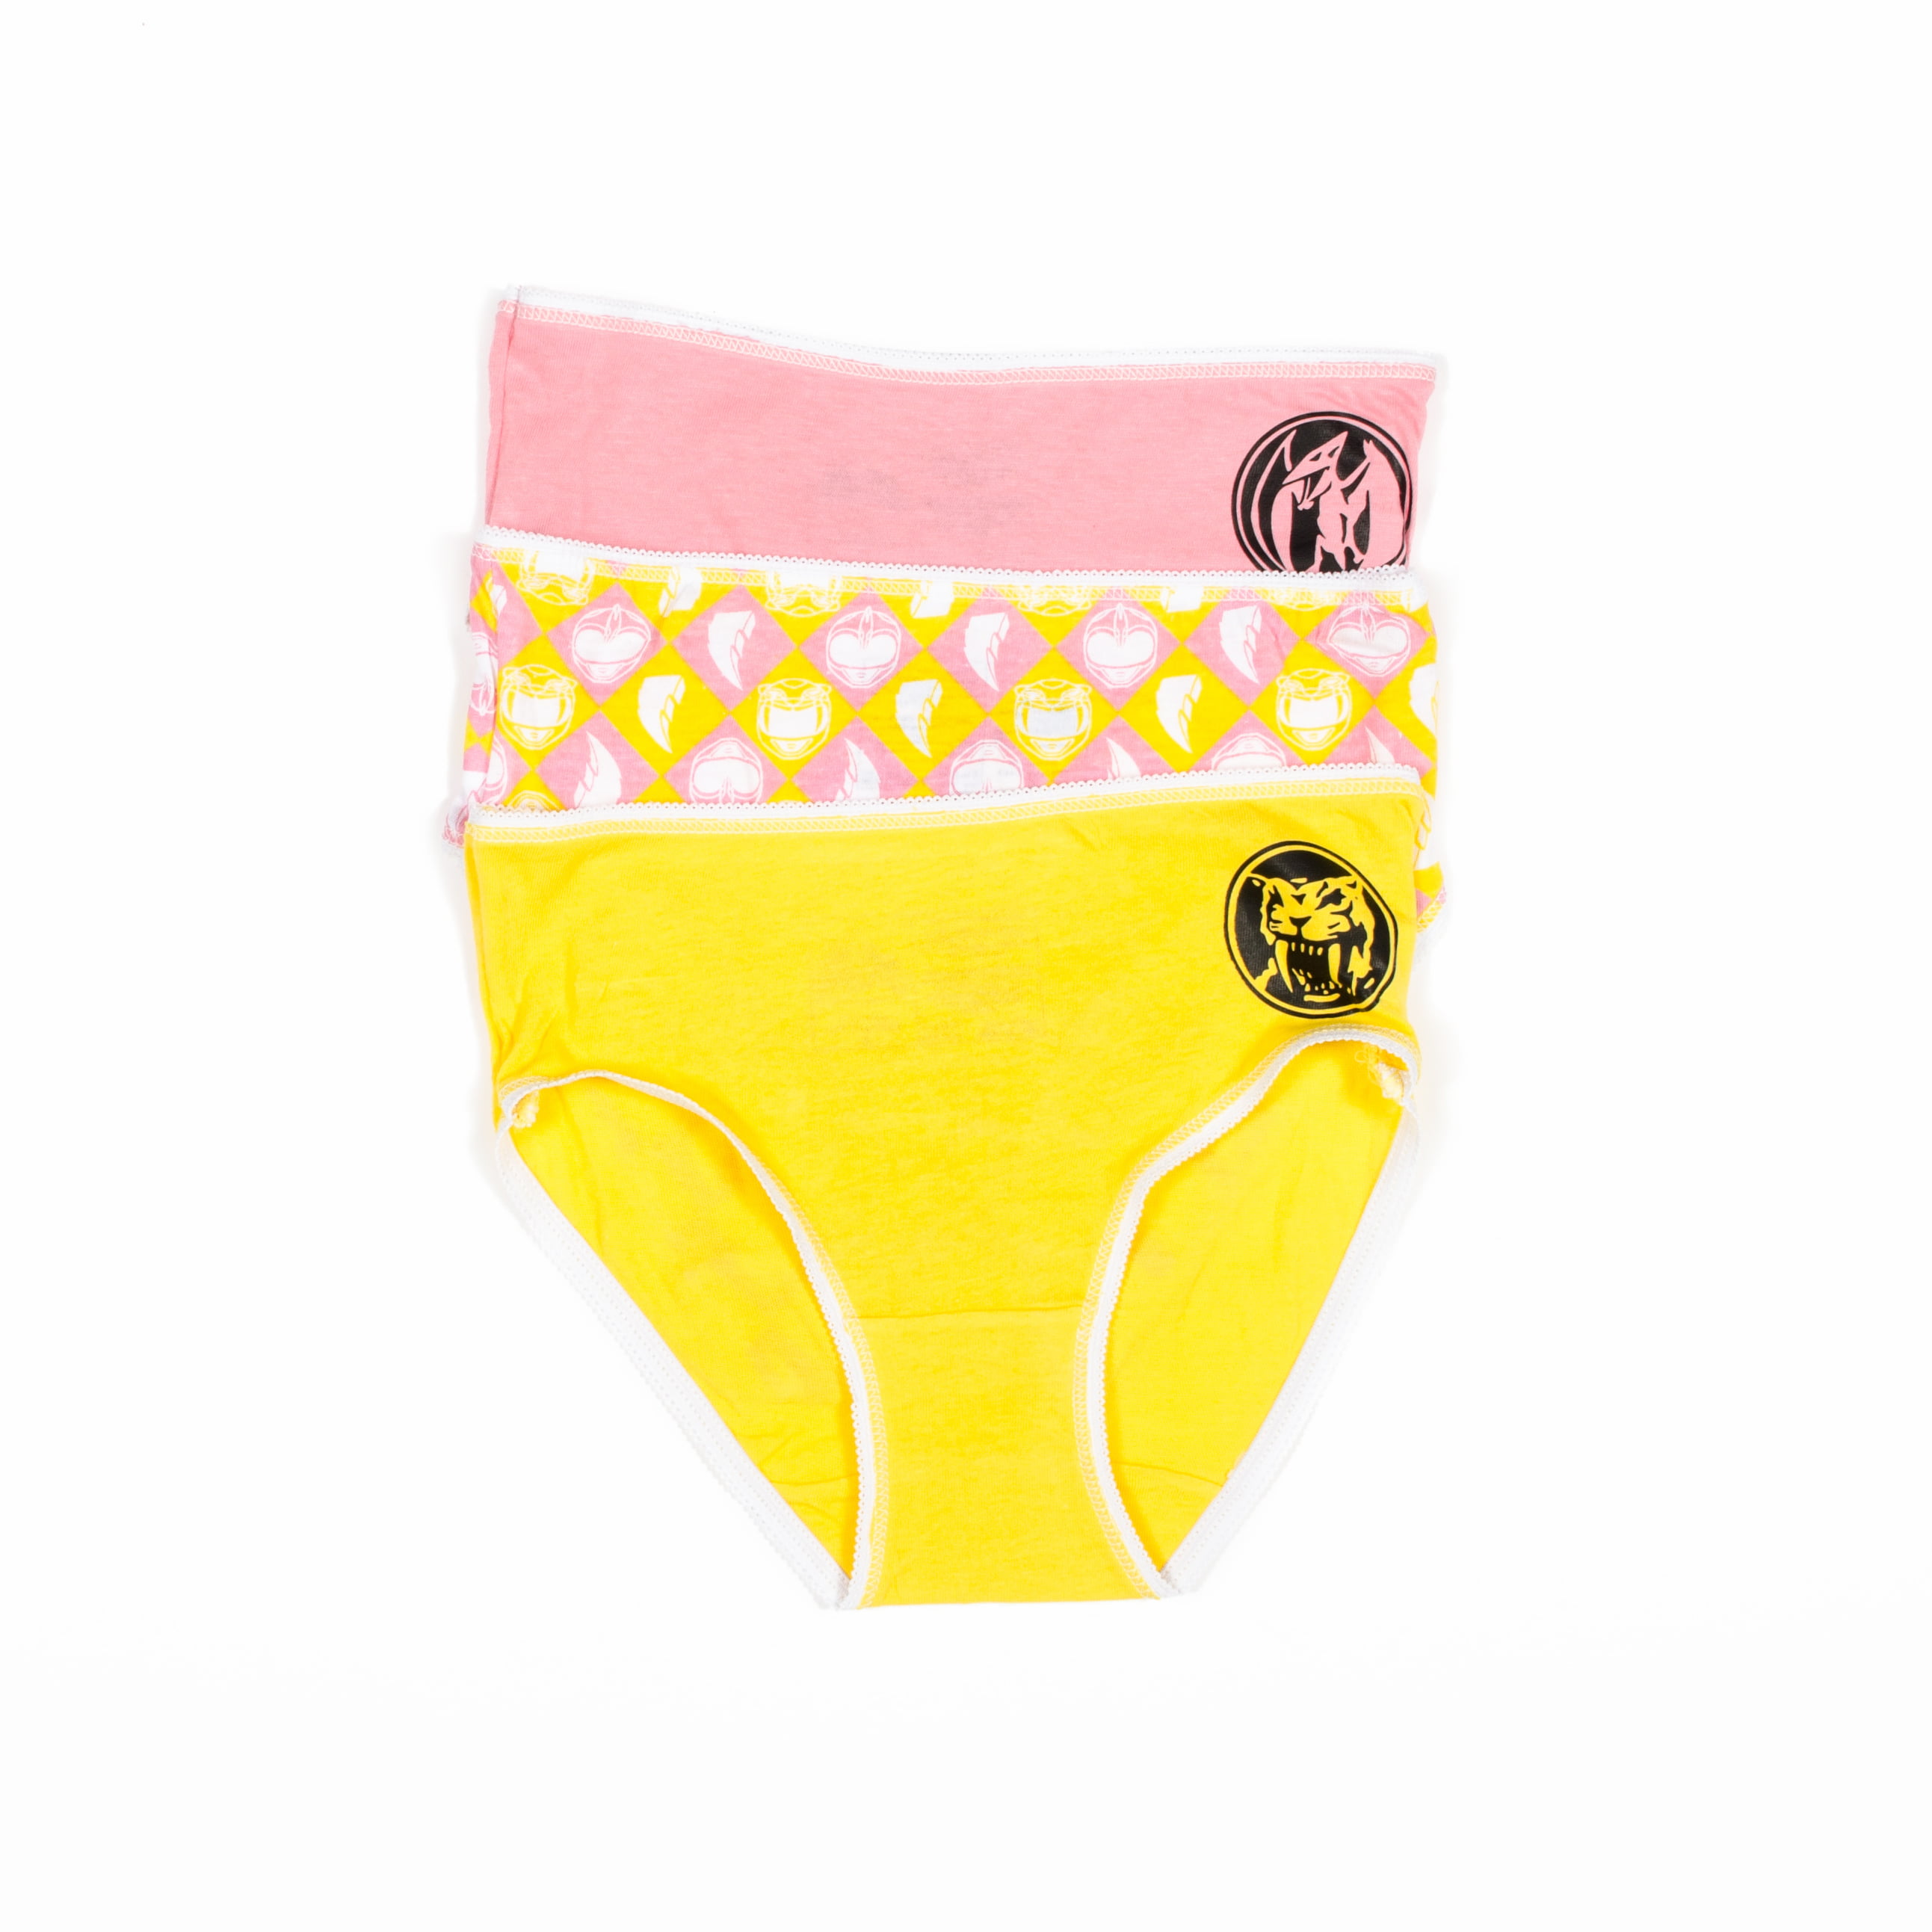 INTIMO Girls Pink and Yellow Power Ranger Underwear 3 Pack 